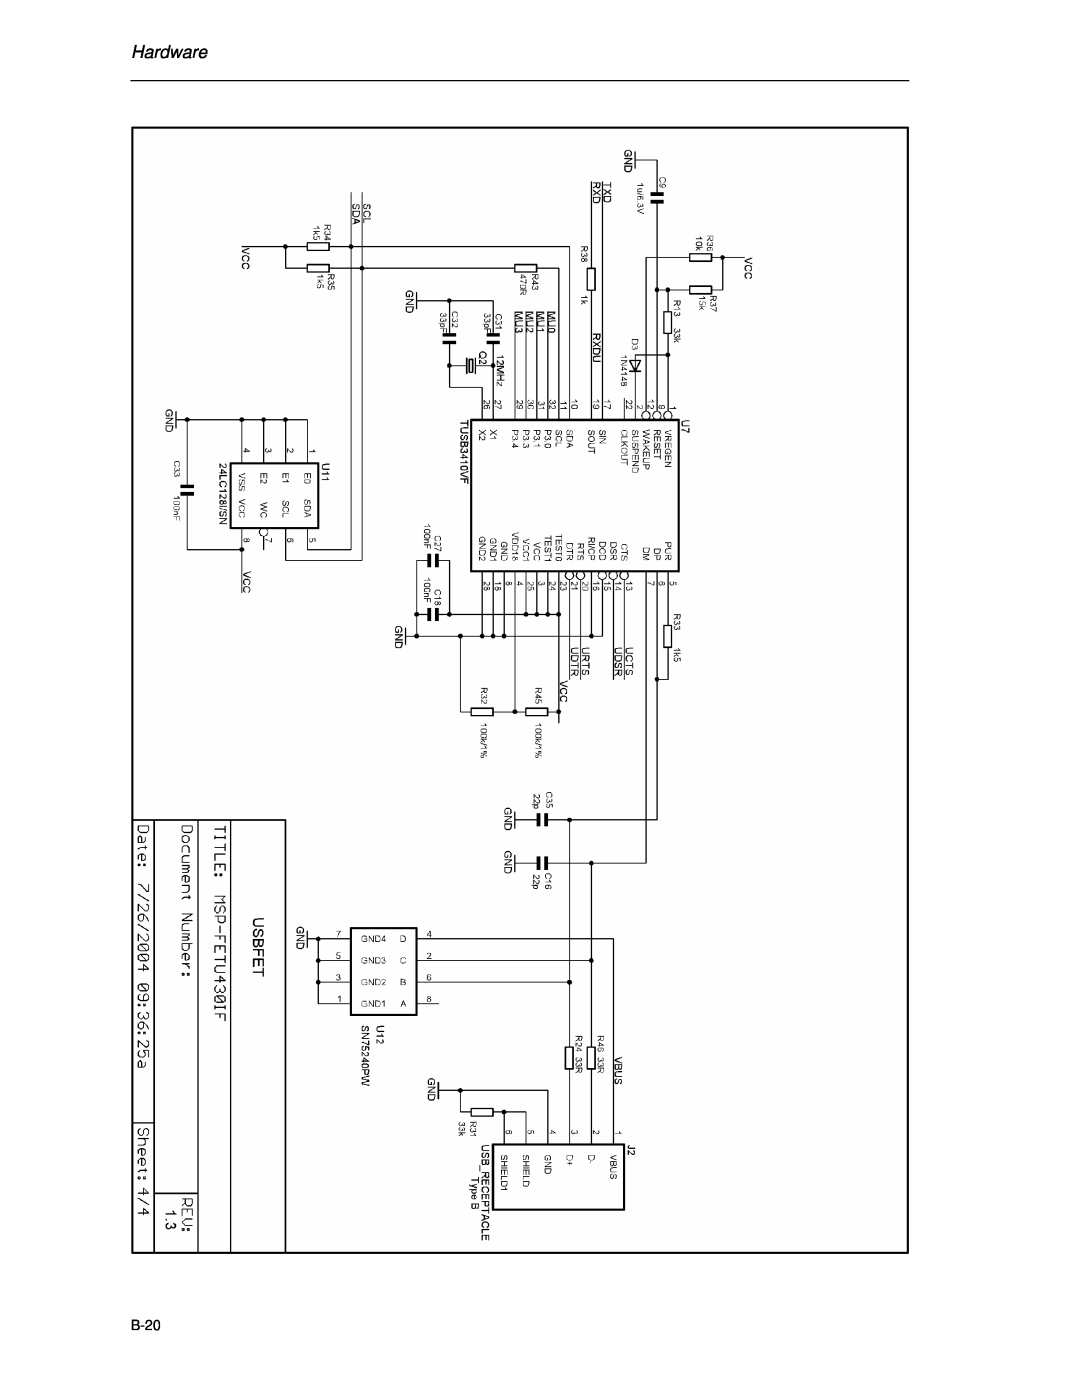 Texas Instruments MSP-FET430 manual Hardware, B-20 